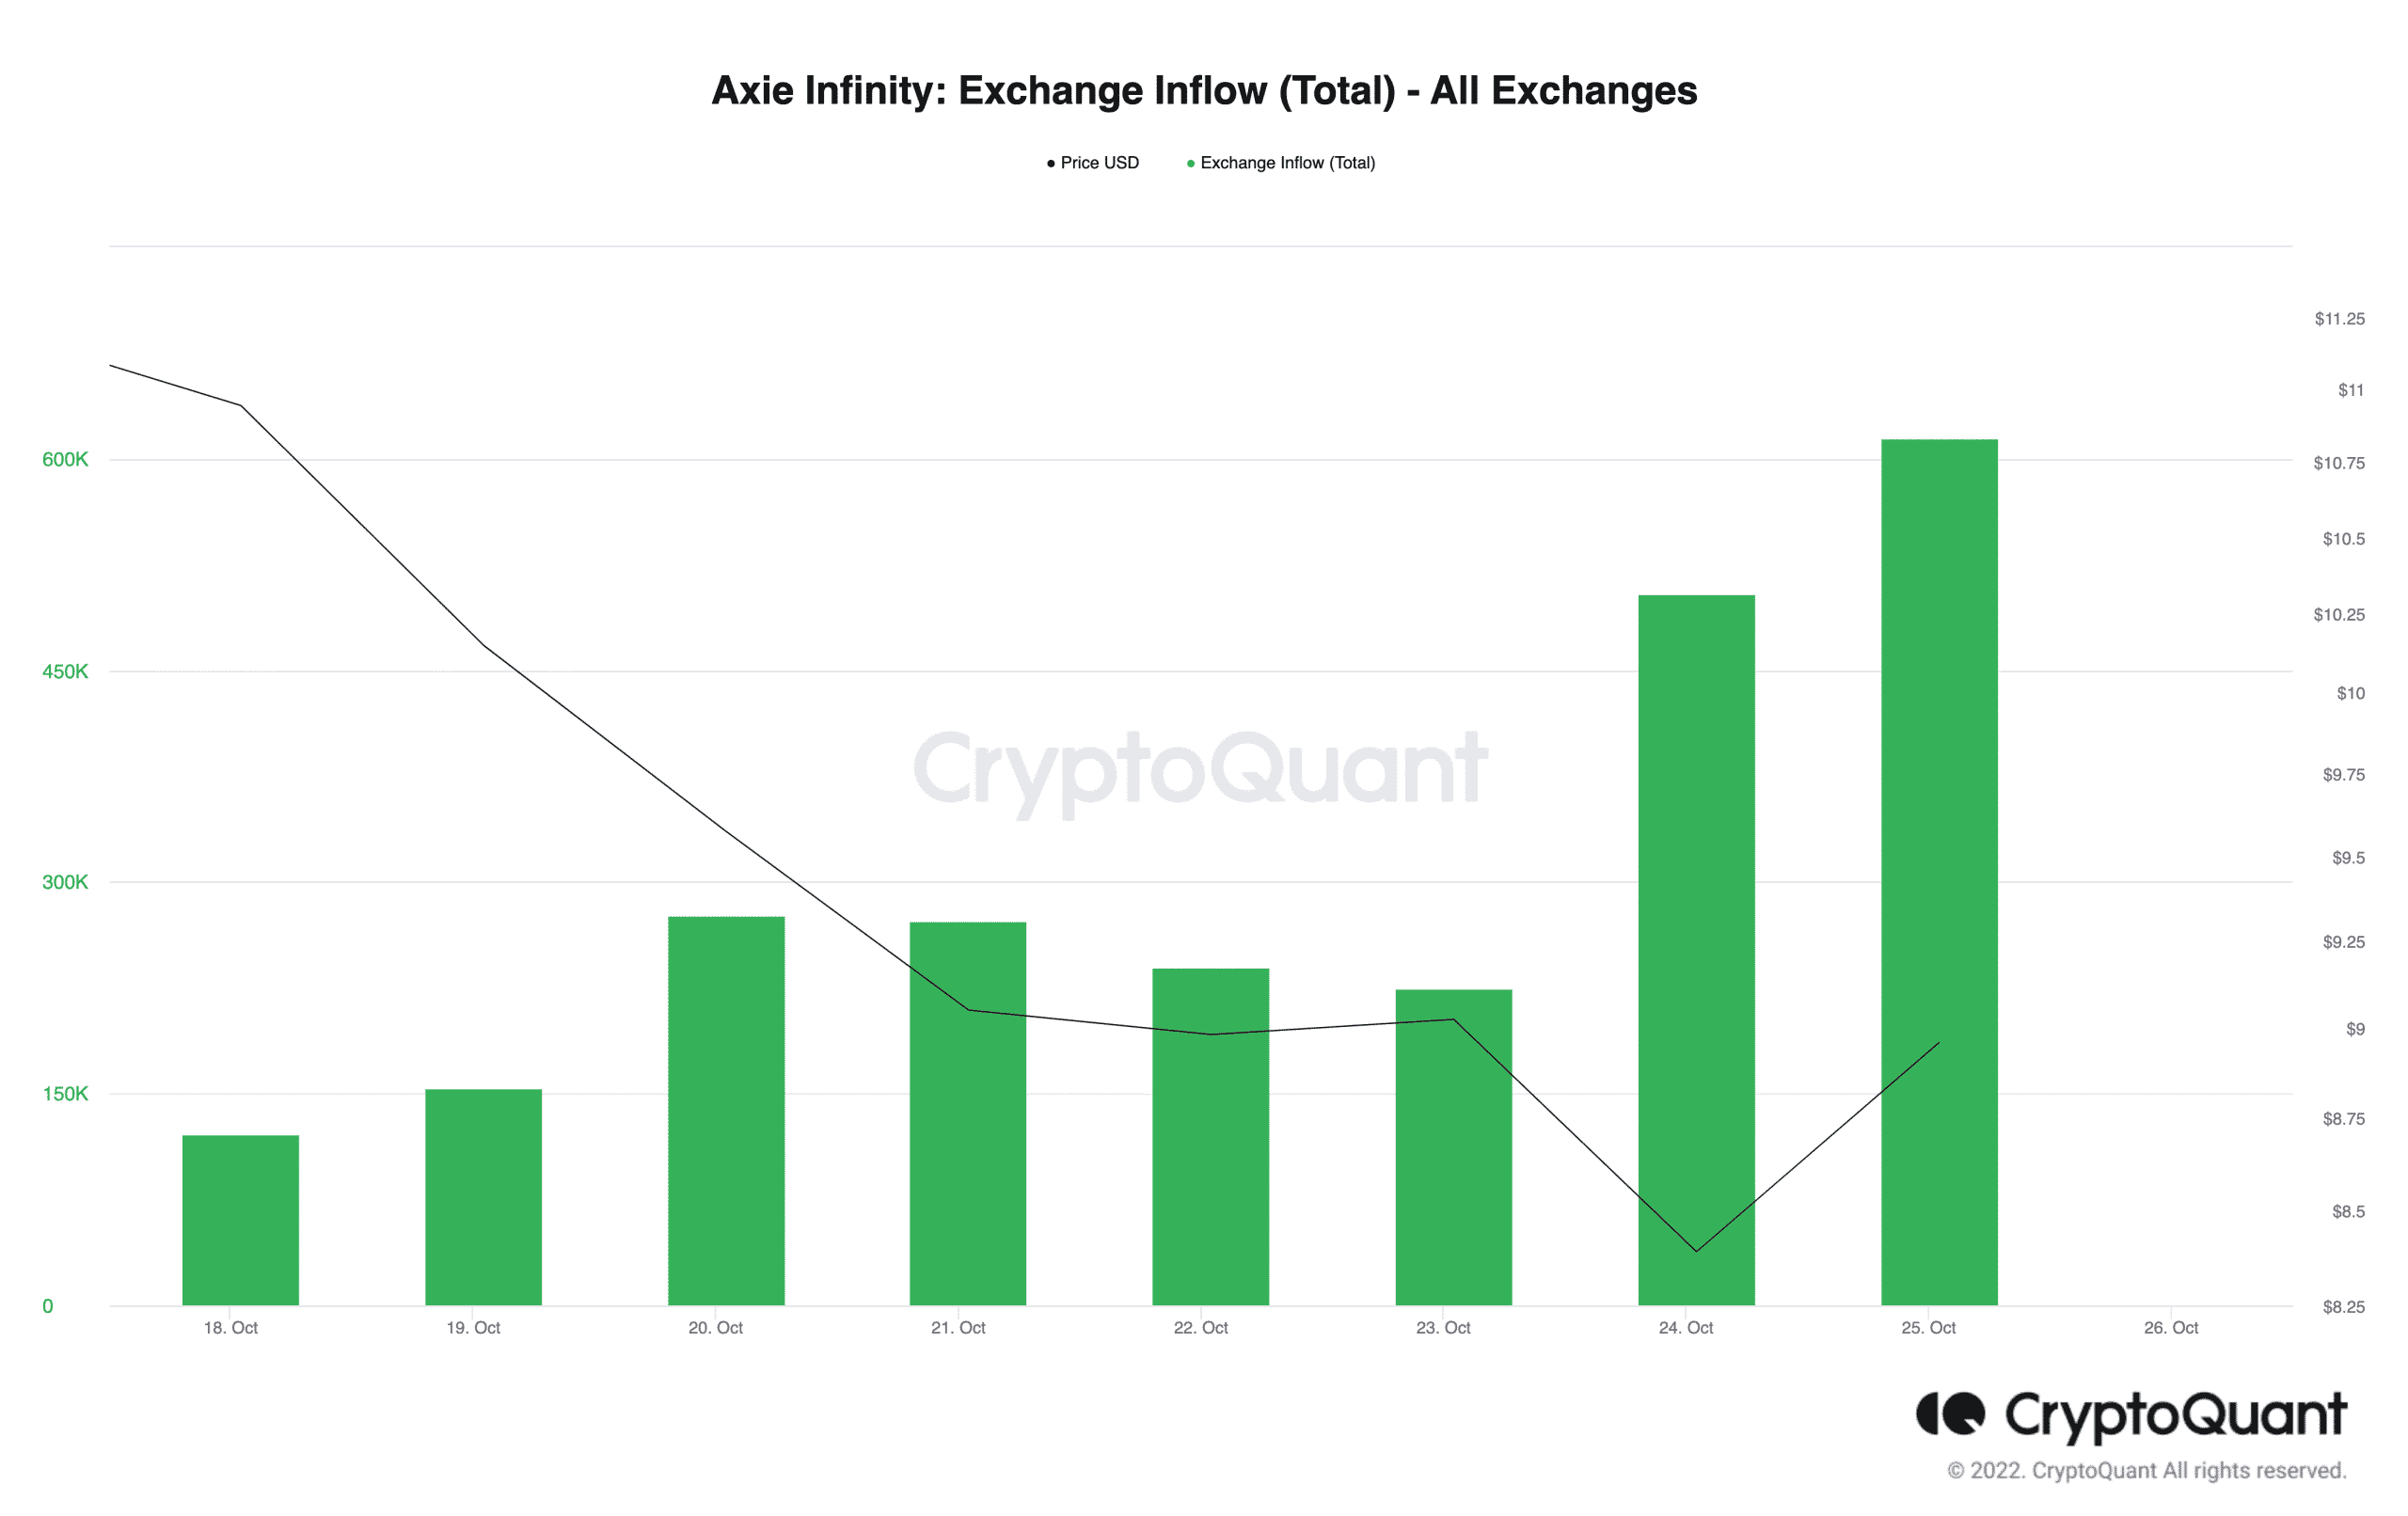 Axie Infintiy exchange inflow according to CryptoQuant